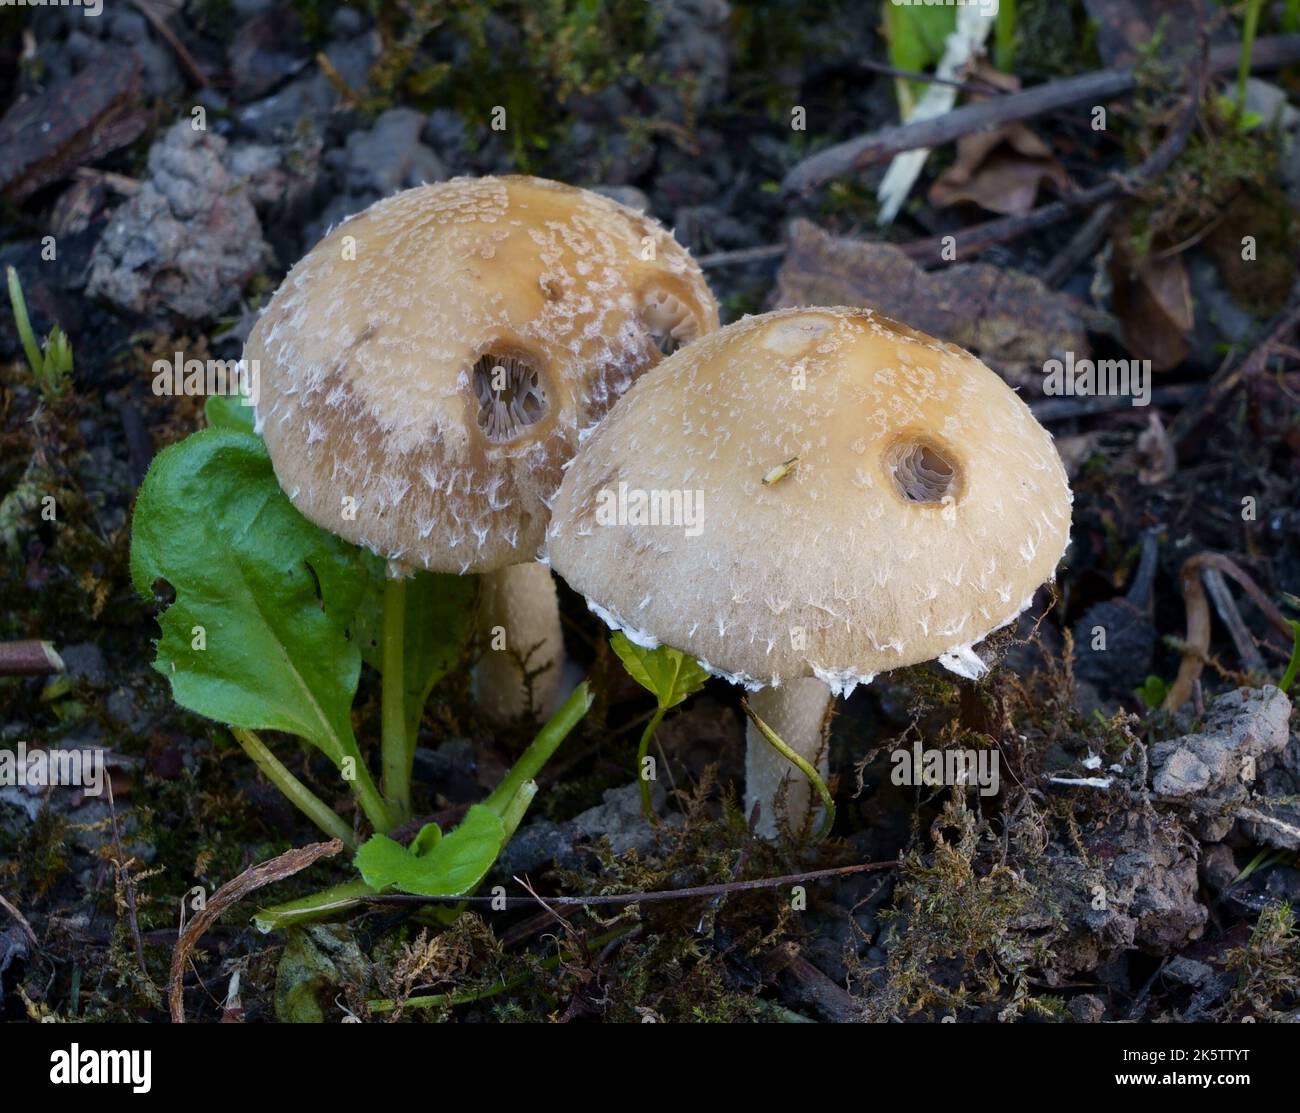 Two mushrooms Stock Photo